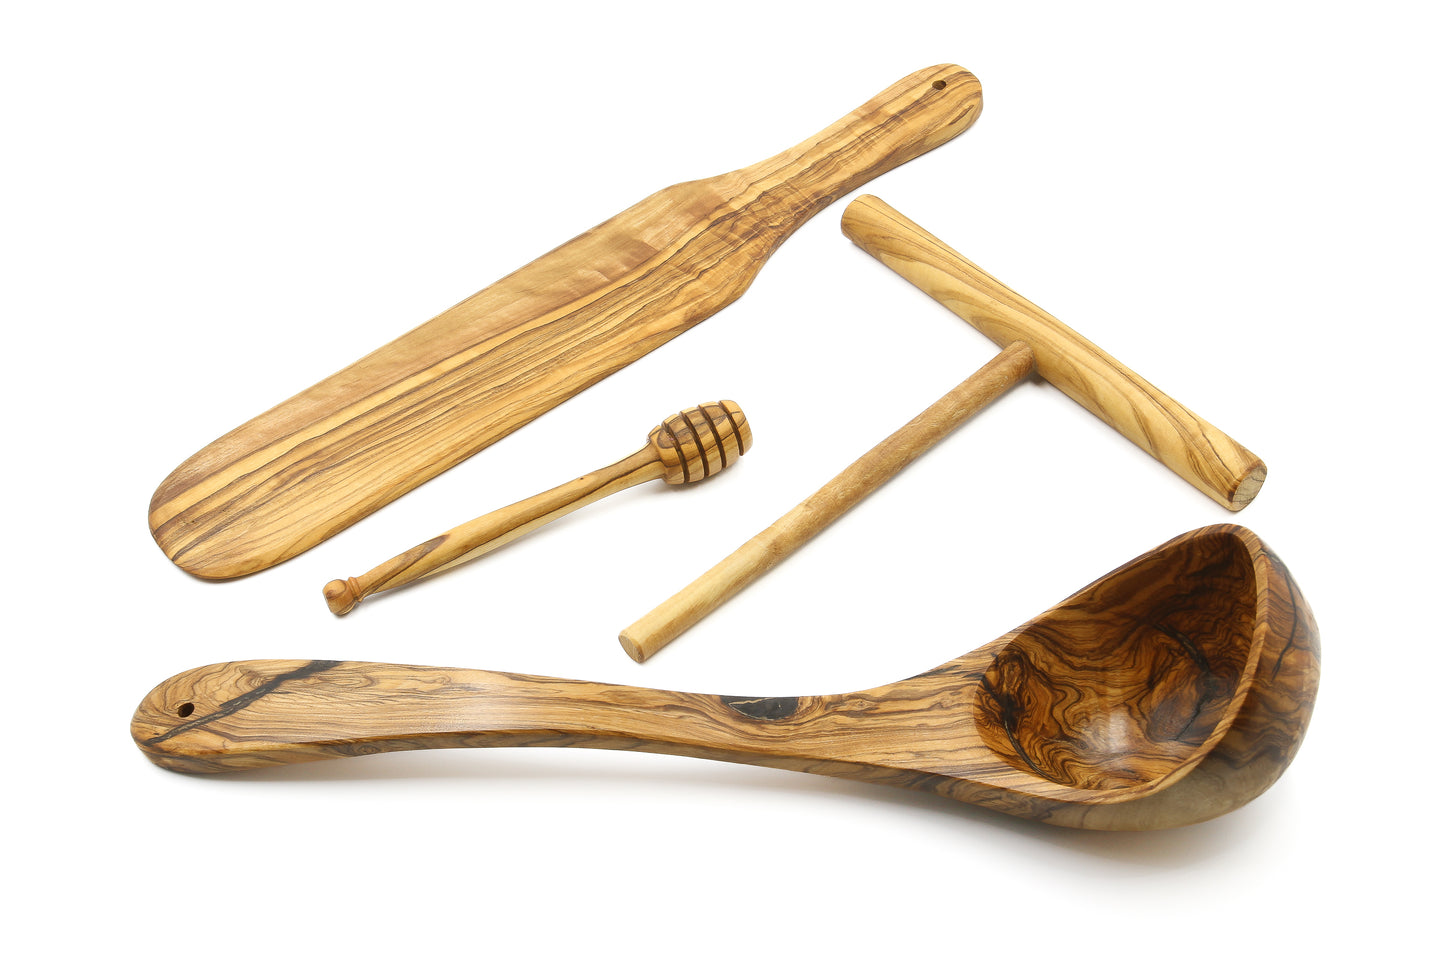 Handcrafted olive wood set designed for premium crepe and pancake preparation